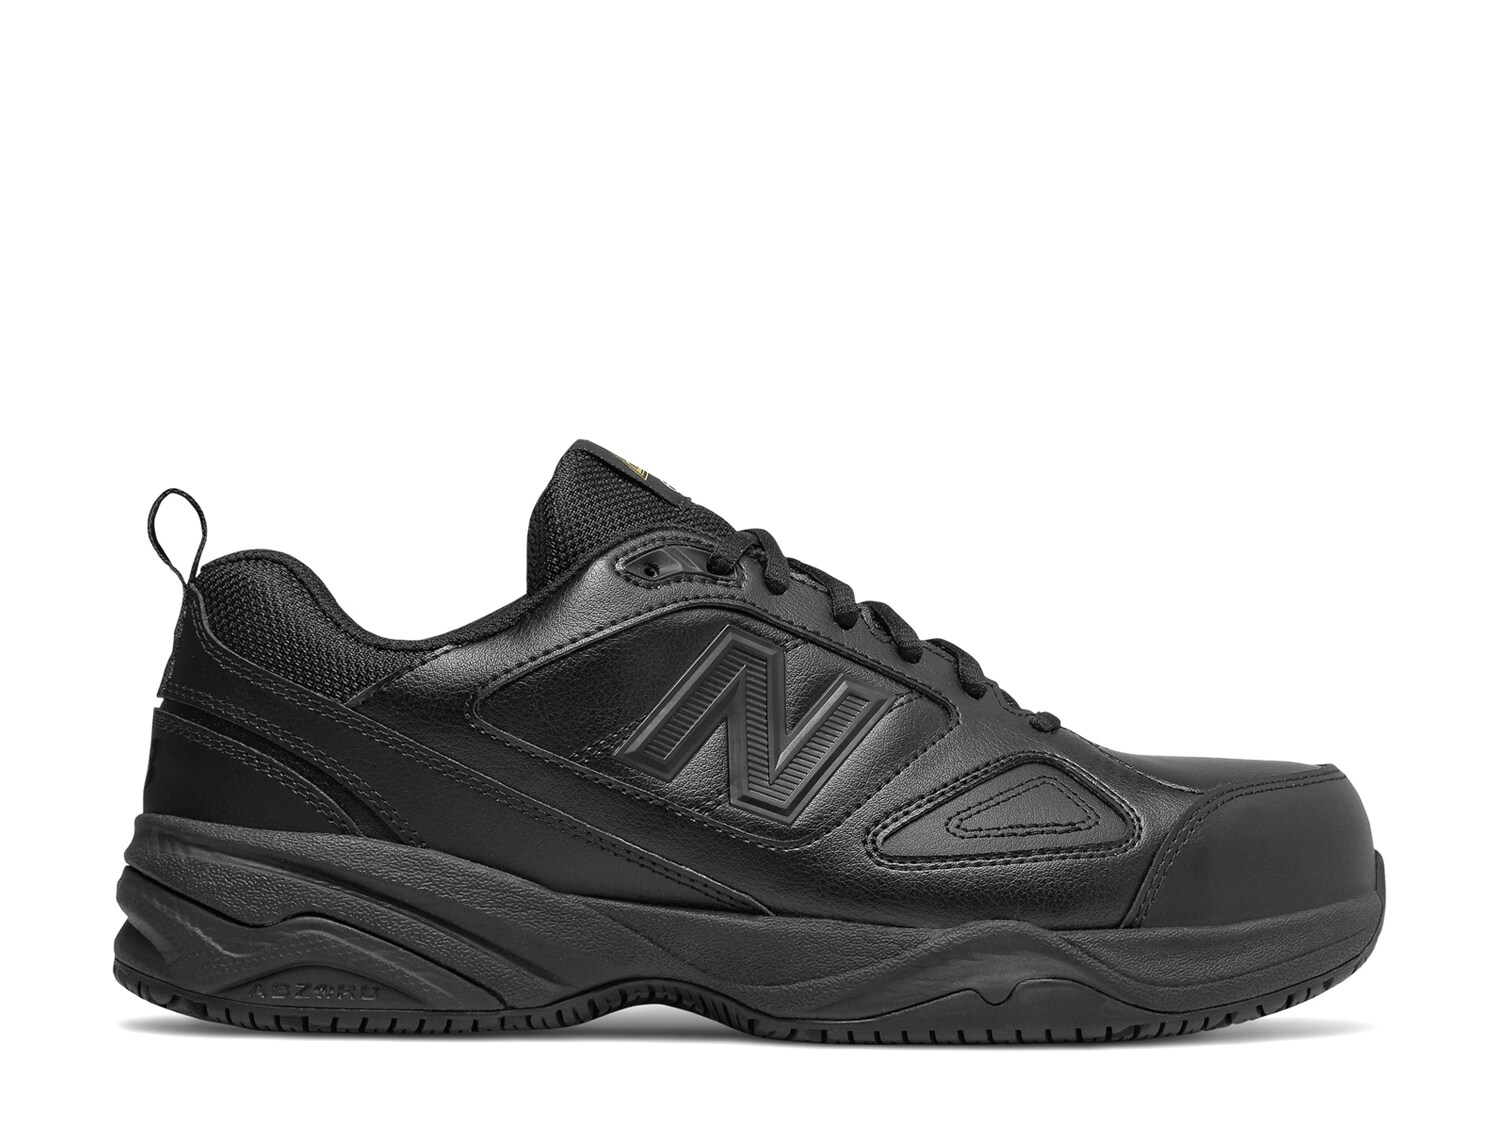 New Balance 627 v2 Steel Toe Work Shoe - Men's | DSW